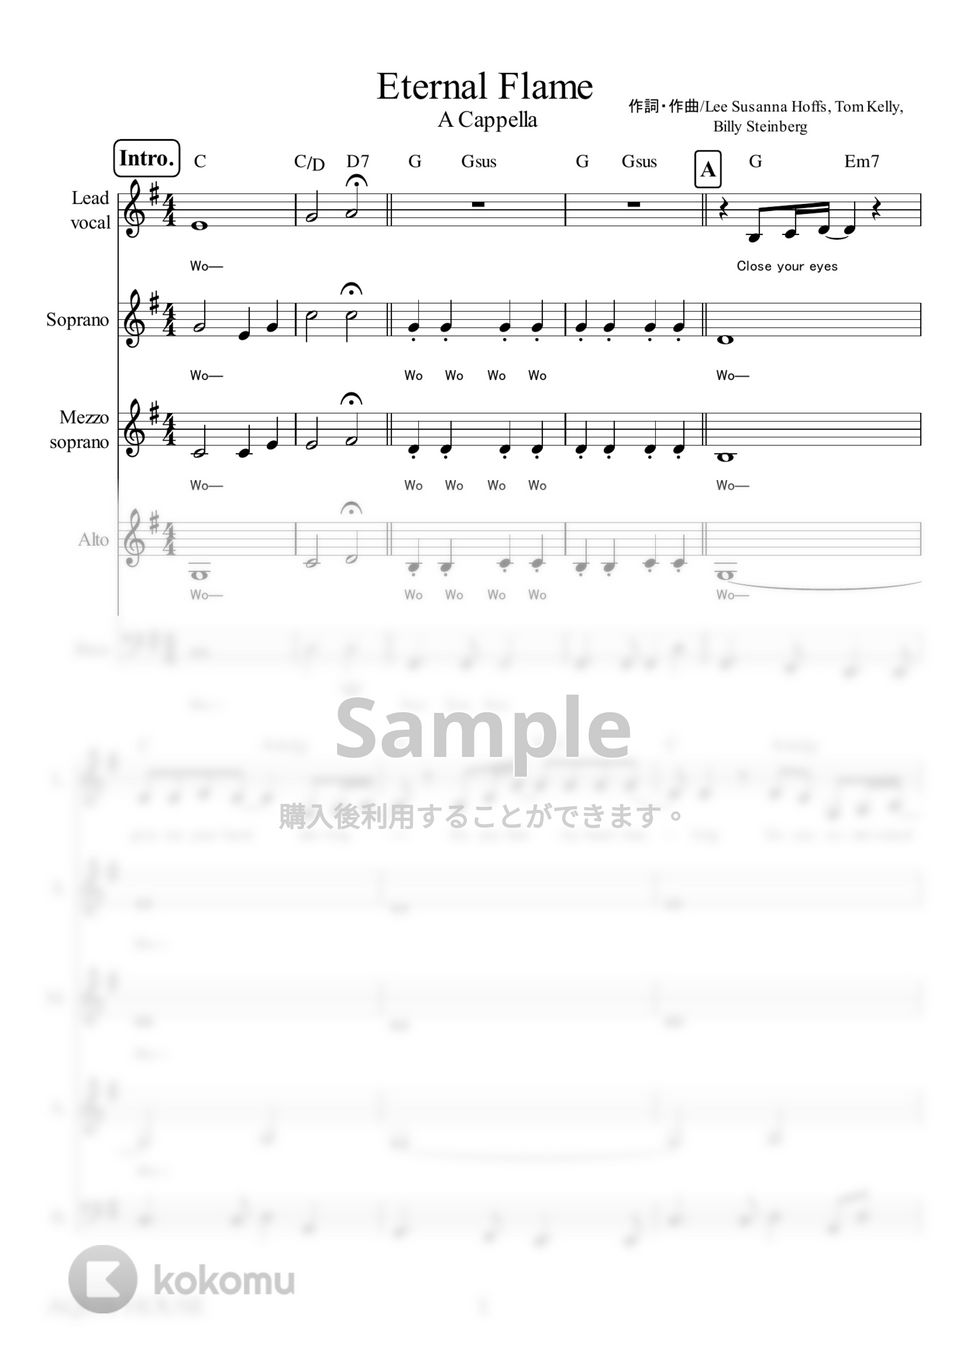 The Bangles - Eternal Flame (アカペラ楽譜♪5声ボイパなし) by 飯田 亜紗子